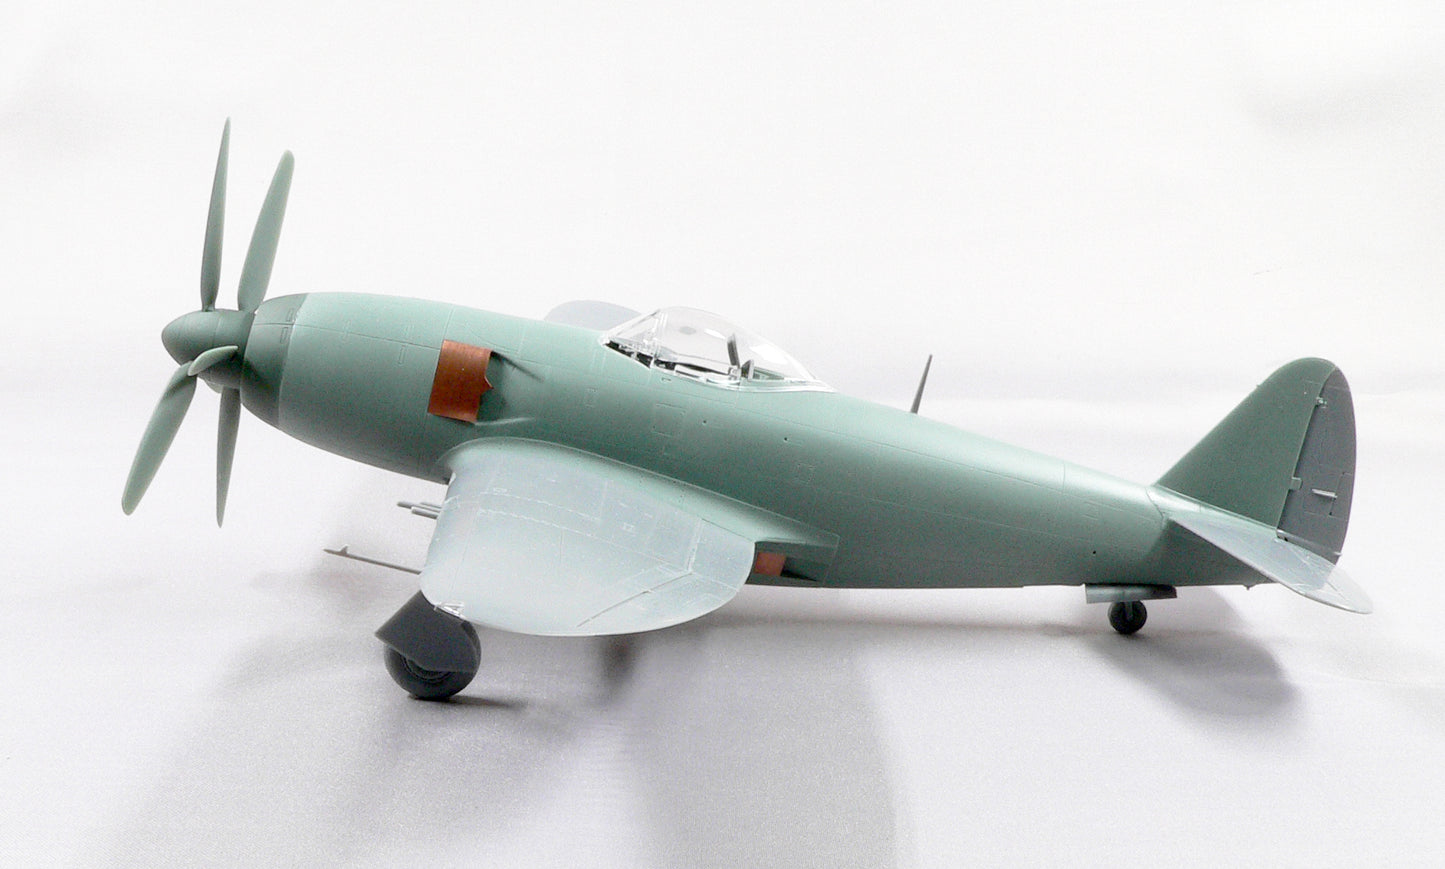 Republic XP-72 Ultrabolt conversion set for Tamiya kit P-47D Thunderbolt "Bubbletop" 1/48 scale